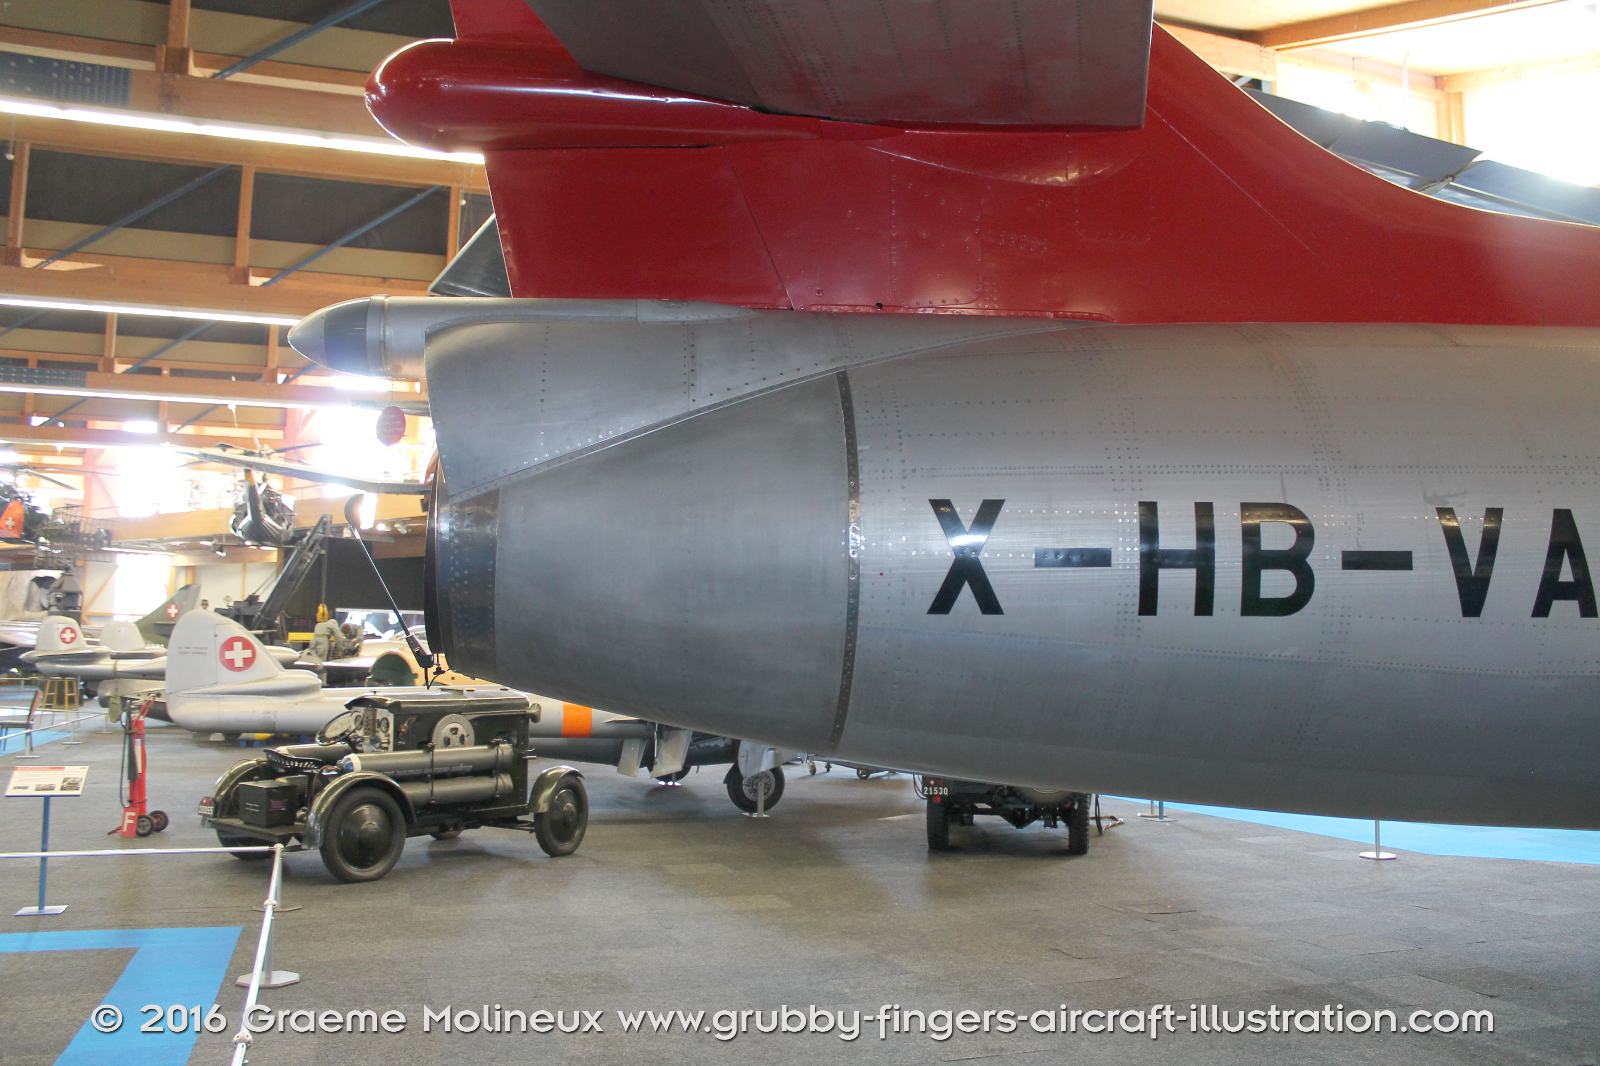 FFA_P-16_X-HB-VAD_Swiss_Air_Force_Museum_2015_25_GrubbyFingers